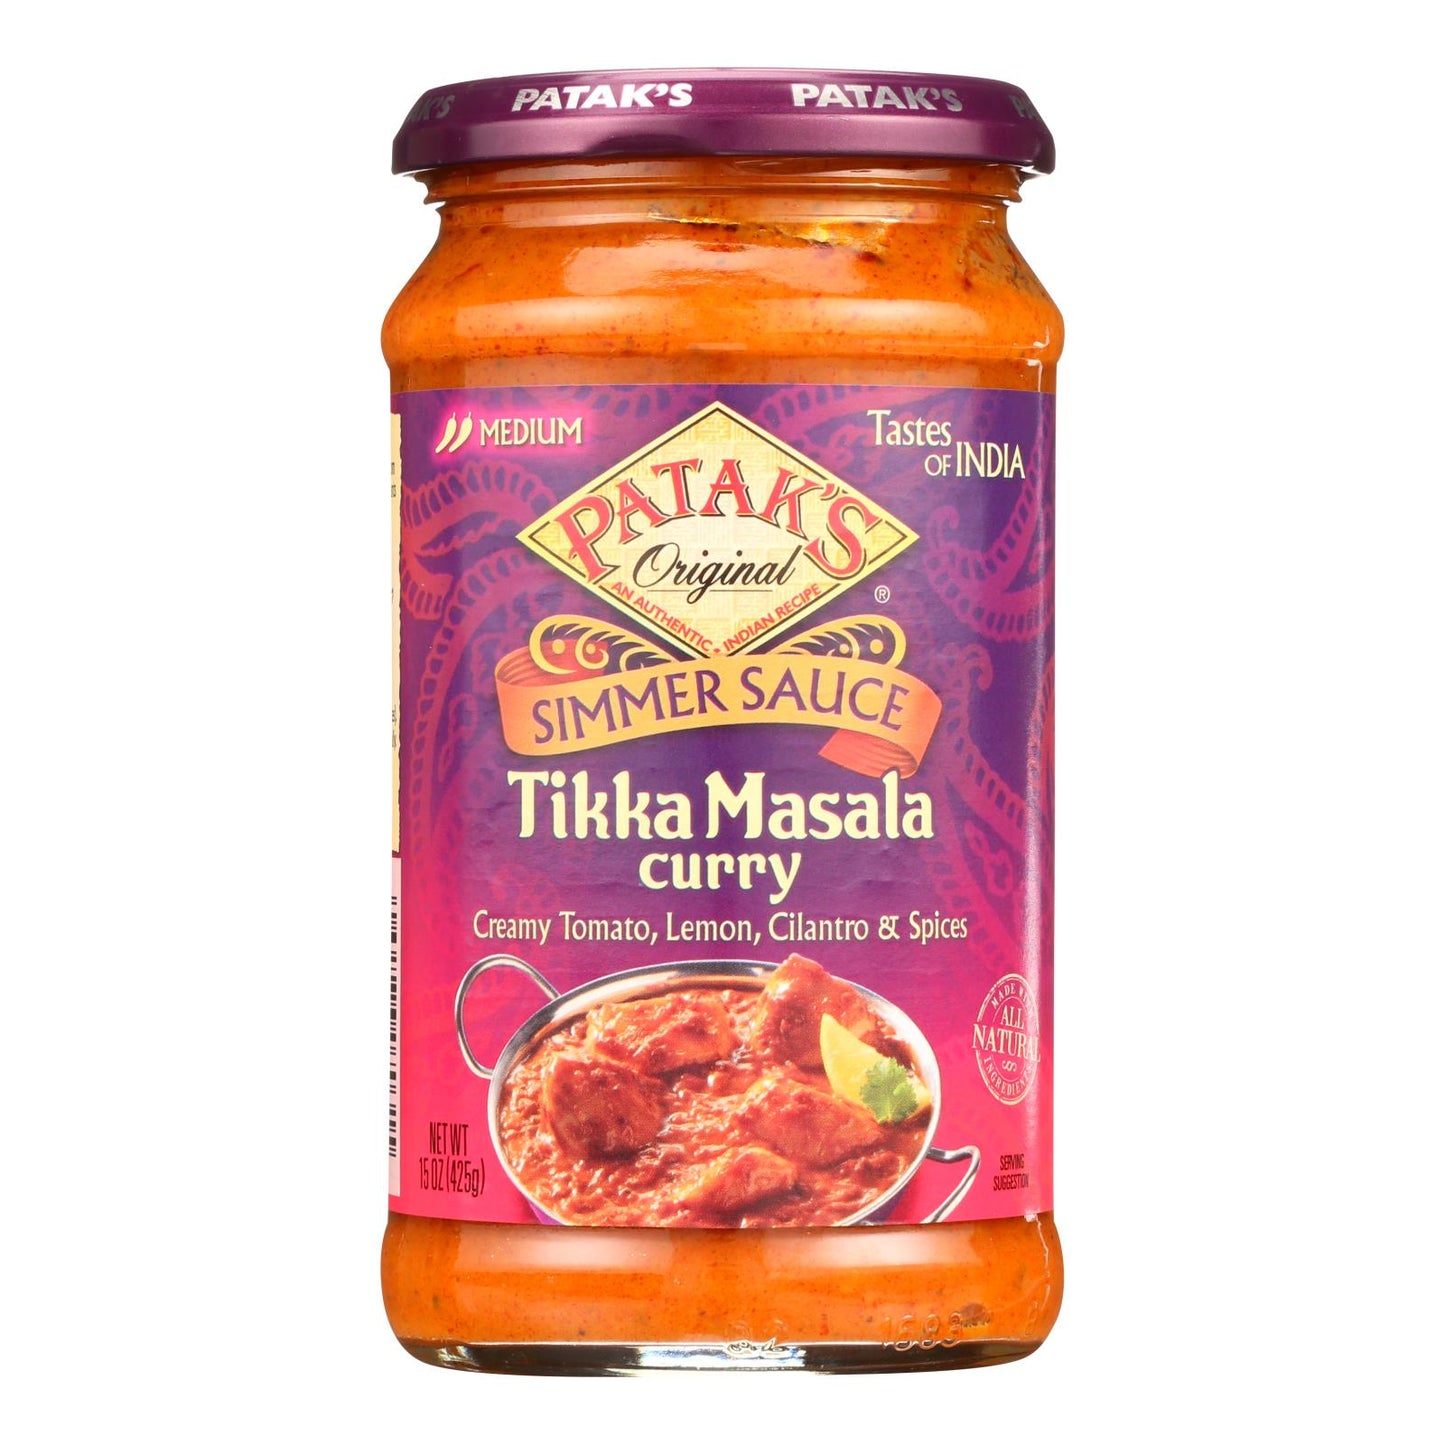 Pataks Simmer Sauce - Tikka Masala Curry - Medium - 15 Oz - Case Of 6